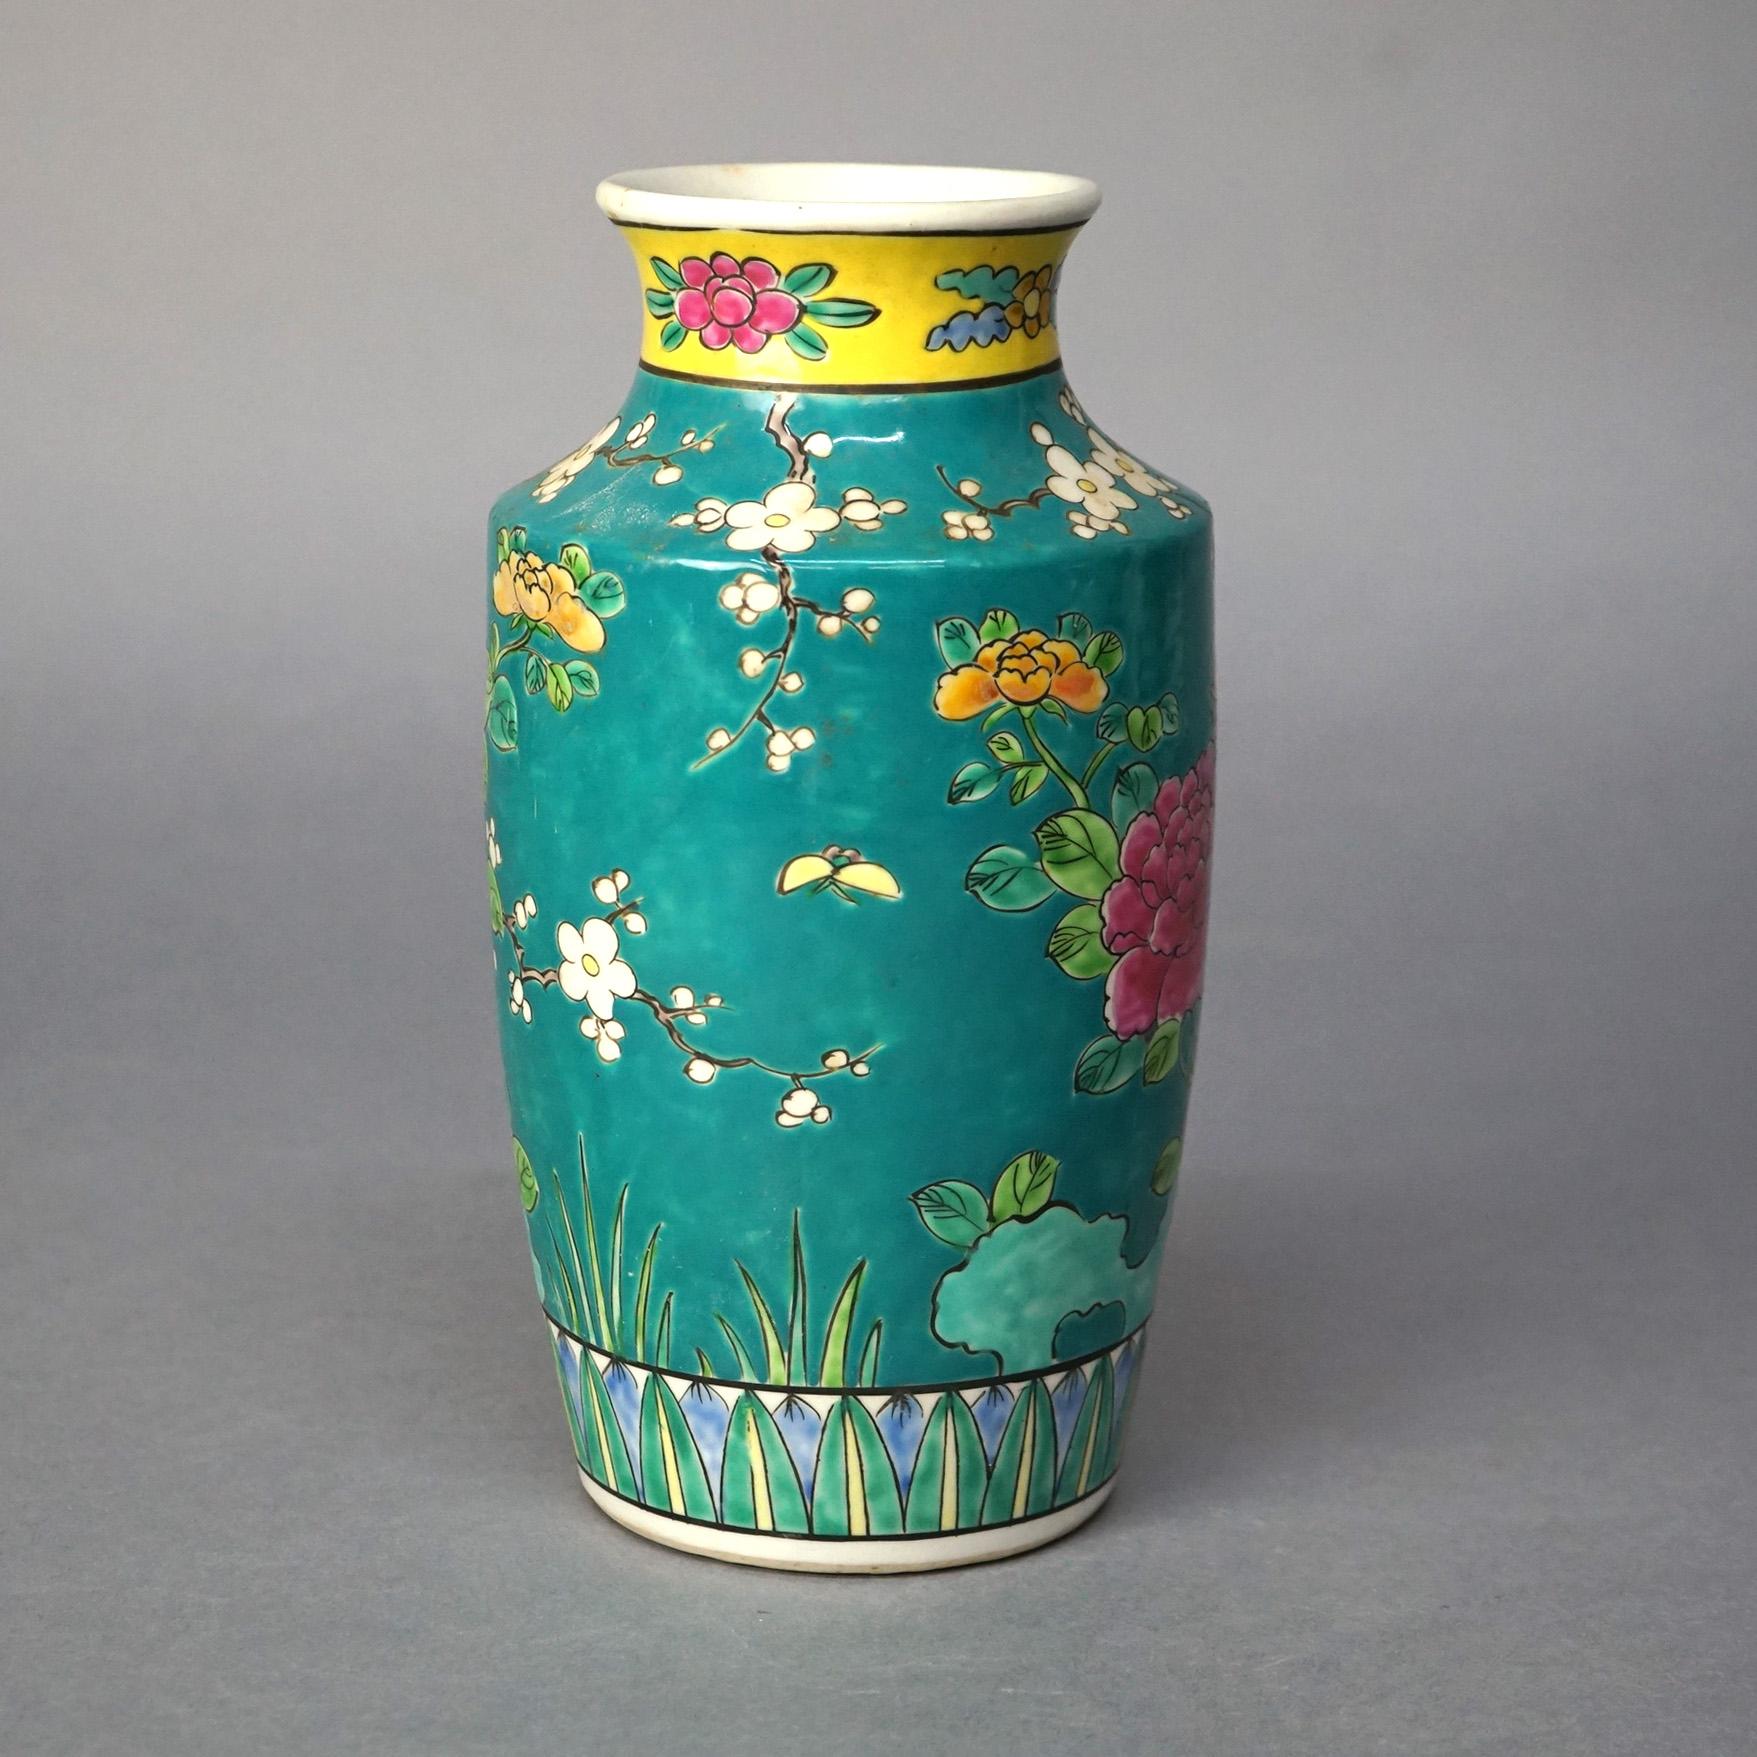 Antique Japanese Porcelain Enameled Garden Scene Vase with Birds & Flowers C1910 For Sale 2